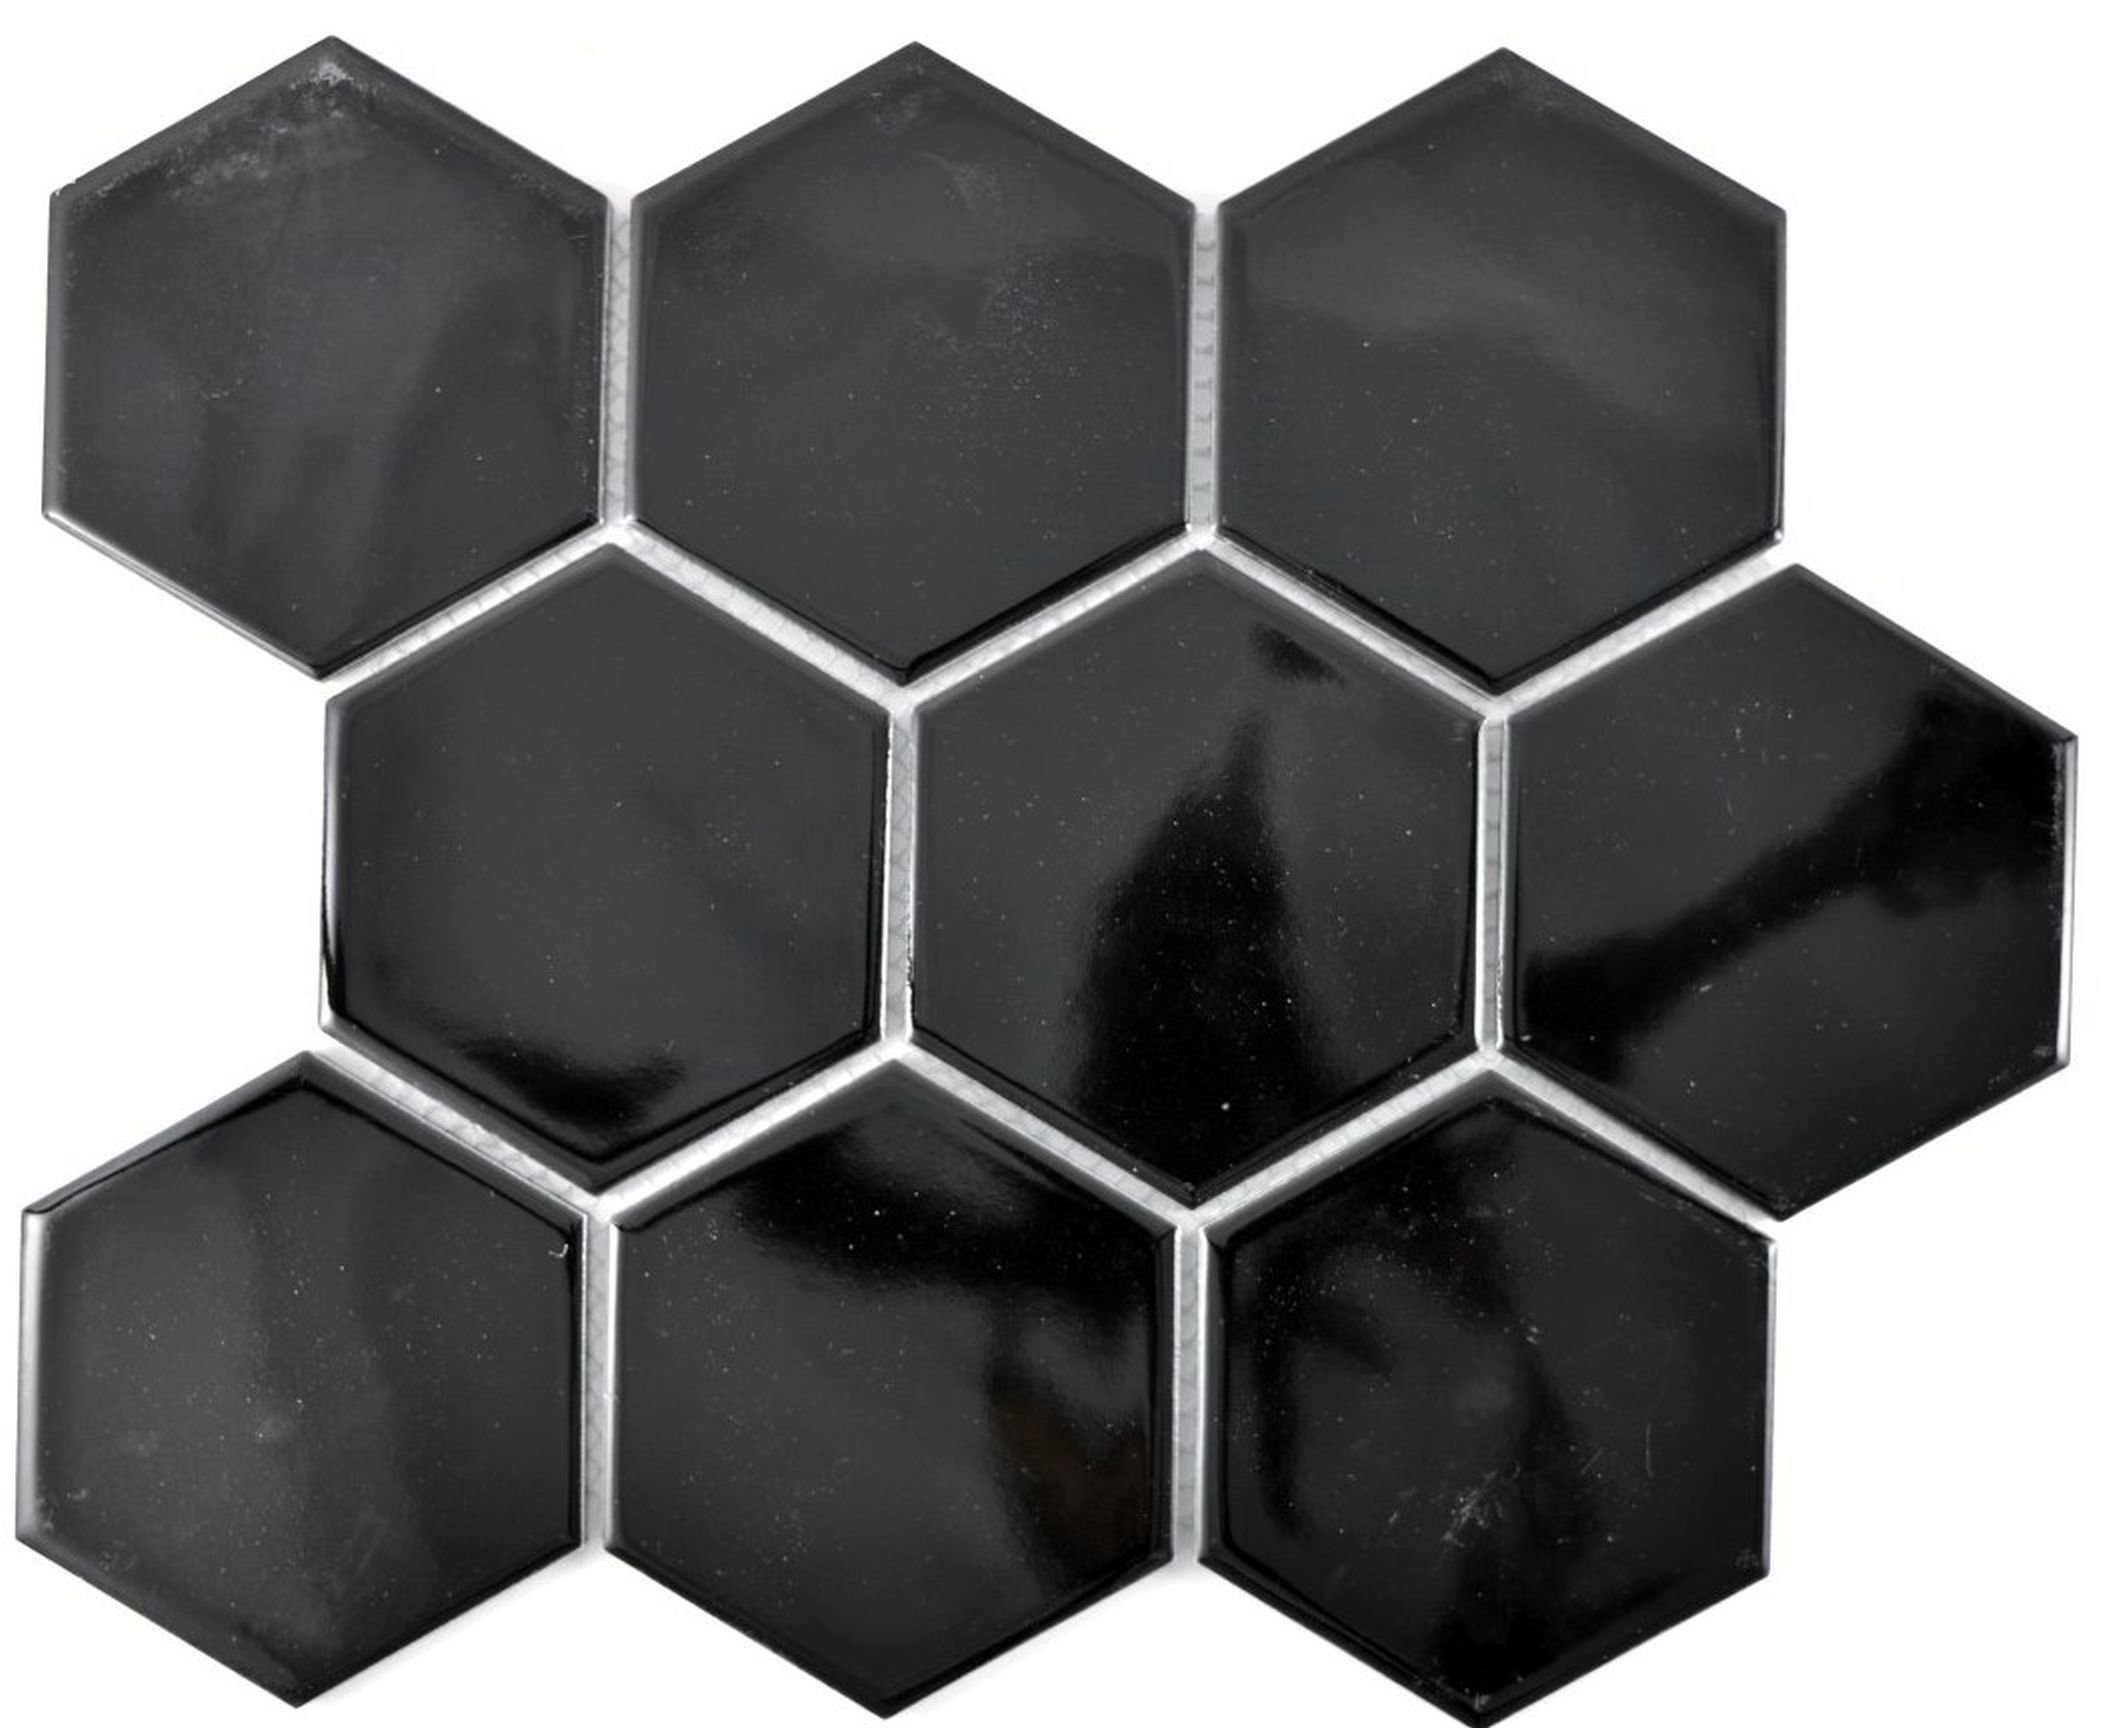 Mosani Mosaikfliesen Hexagonale Sechseck Mosaik Fliese Keramik schwarz glänzend Küche Bad